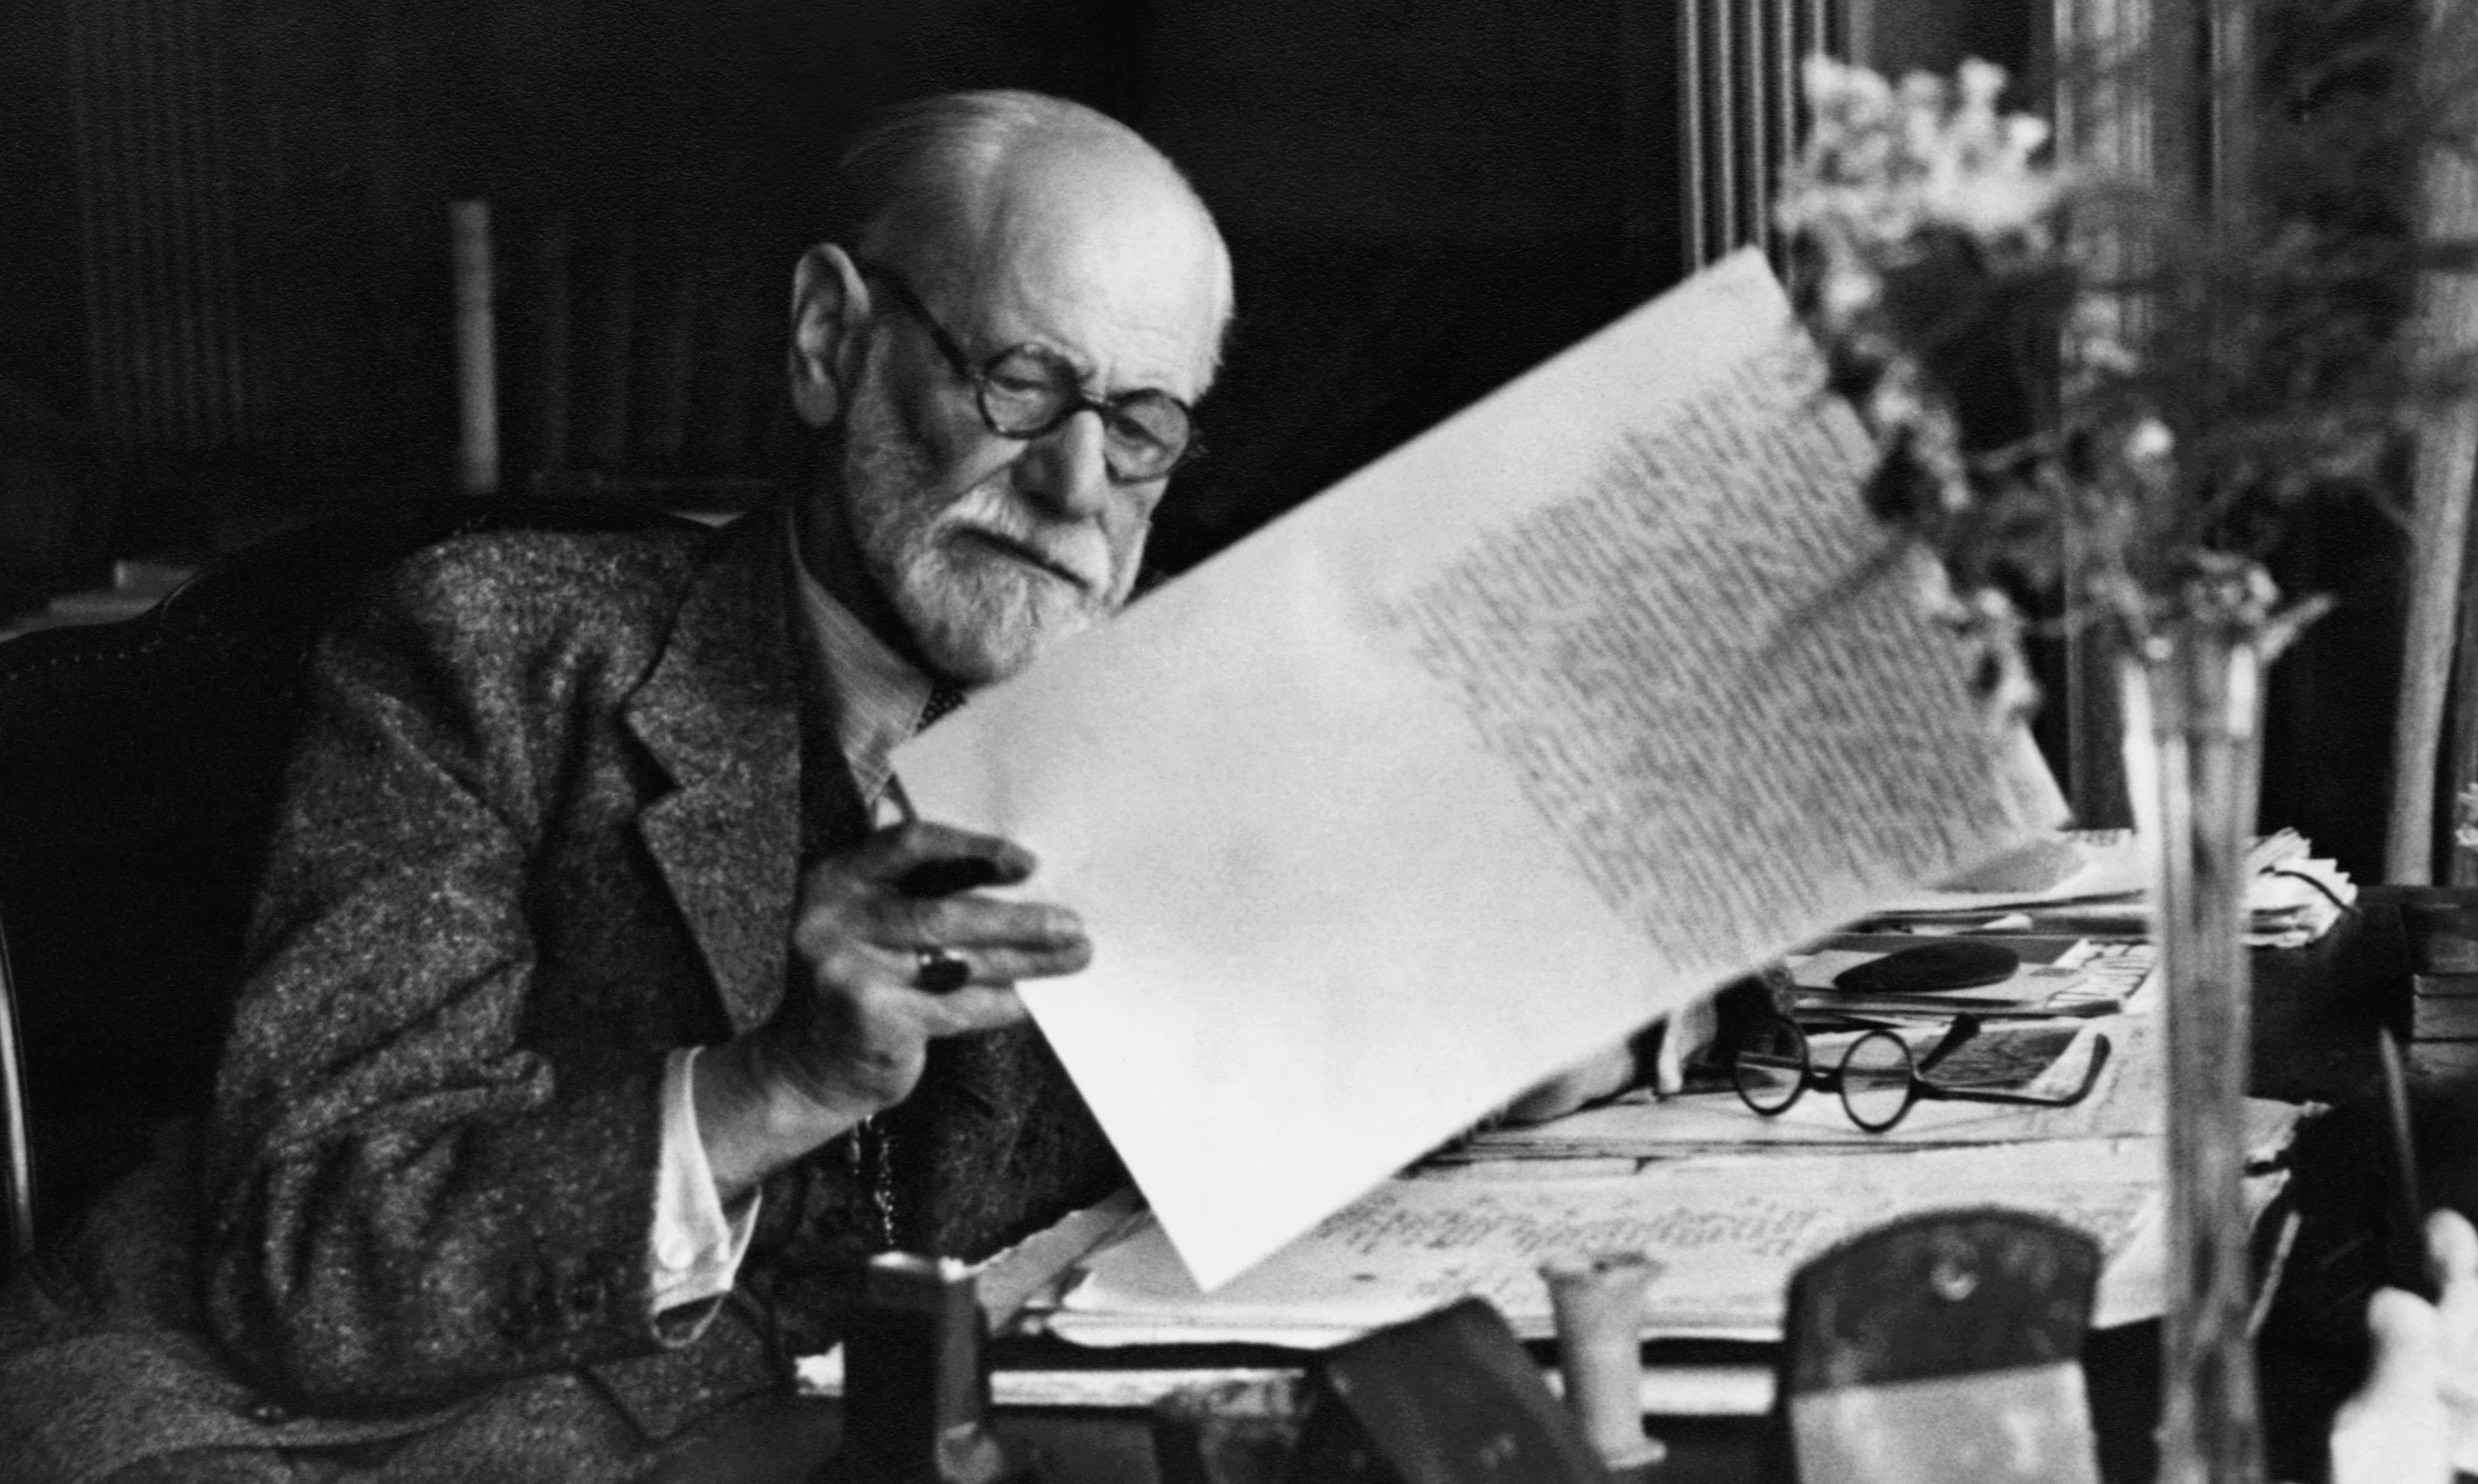 Original Caption: Sigmund Freud, 1856-1939, Austrian psychiatrist, in the office of his Vienna home looking at a manuscript. B/w photo ca.1930.